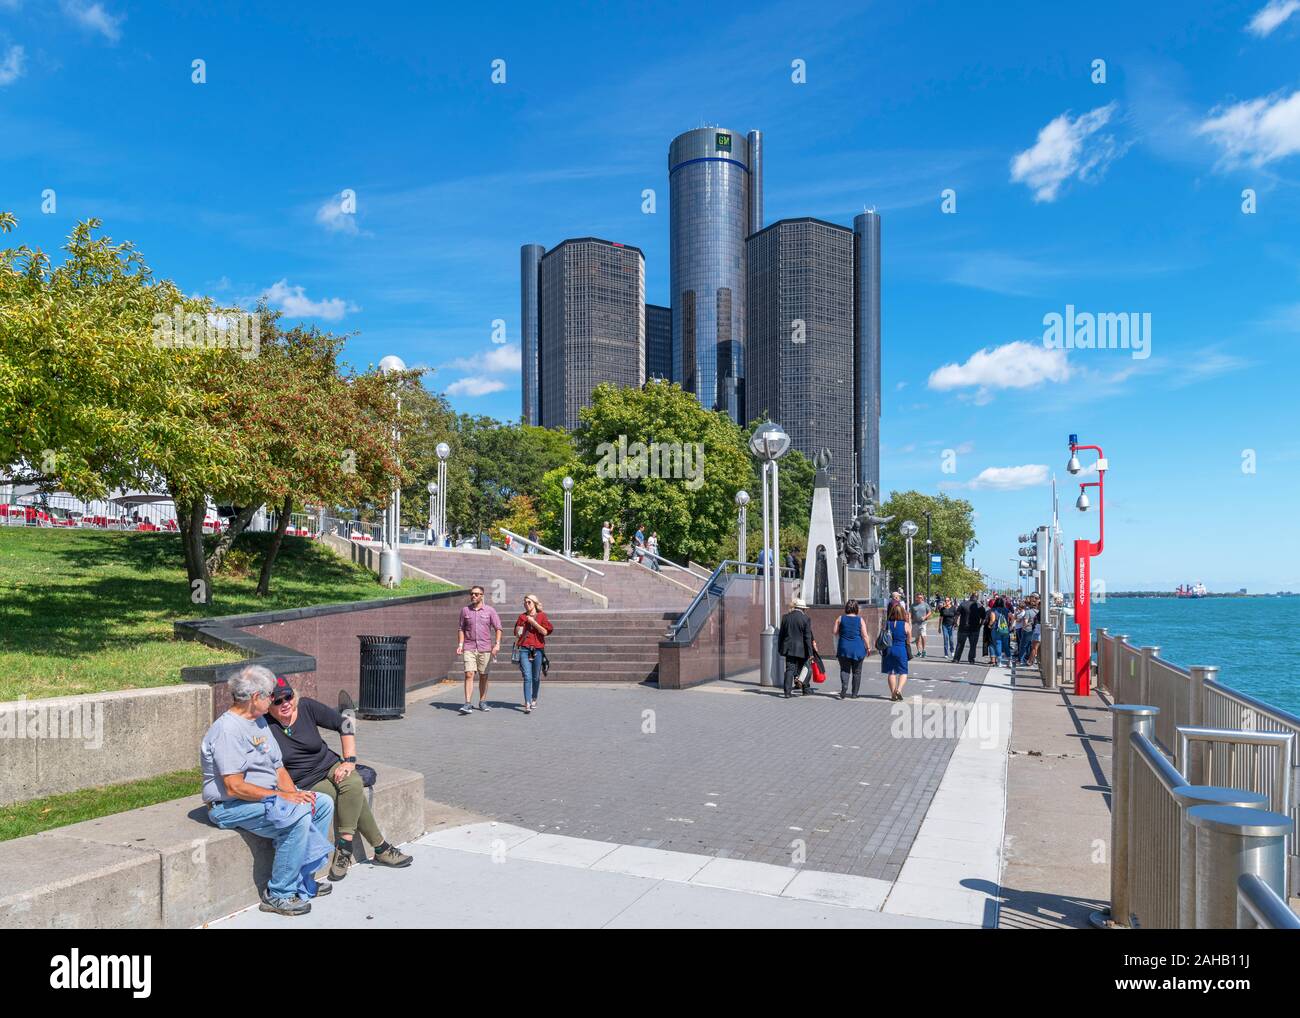 The skyline of the Renaissance Center viewed from Detroit Riverwalk, downtown Detroit, Michigan, USA Stock Photo